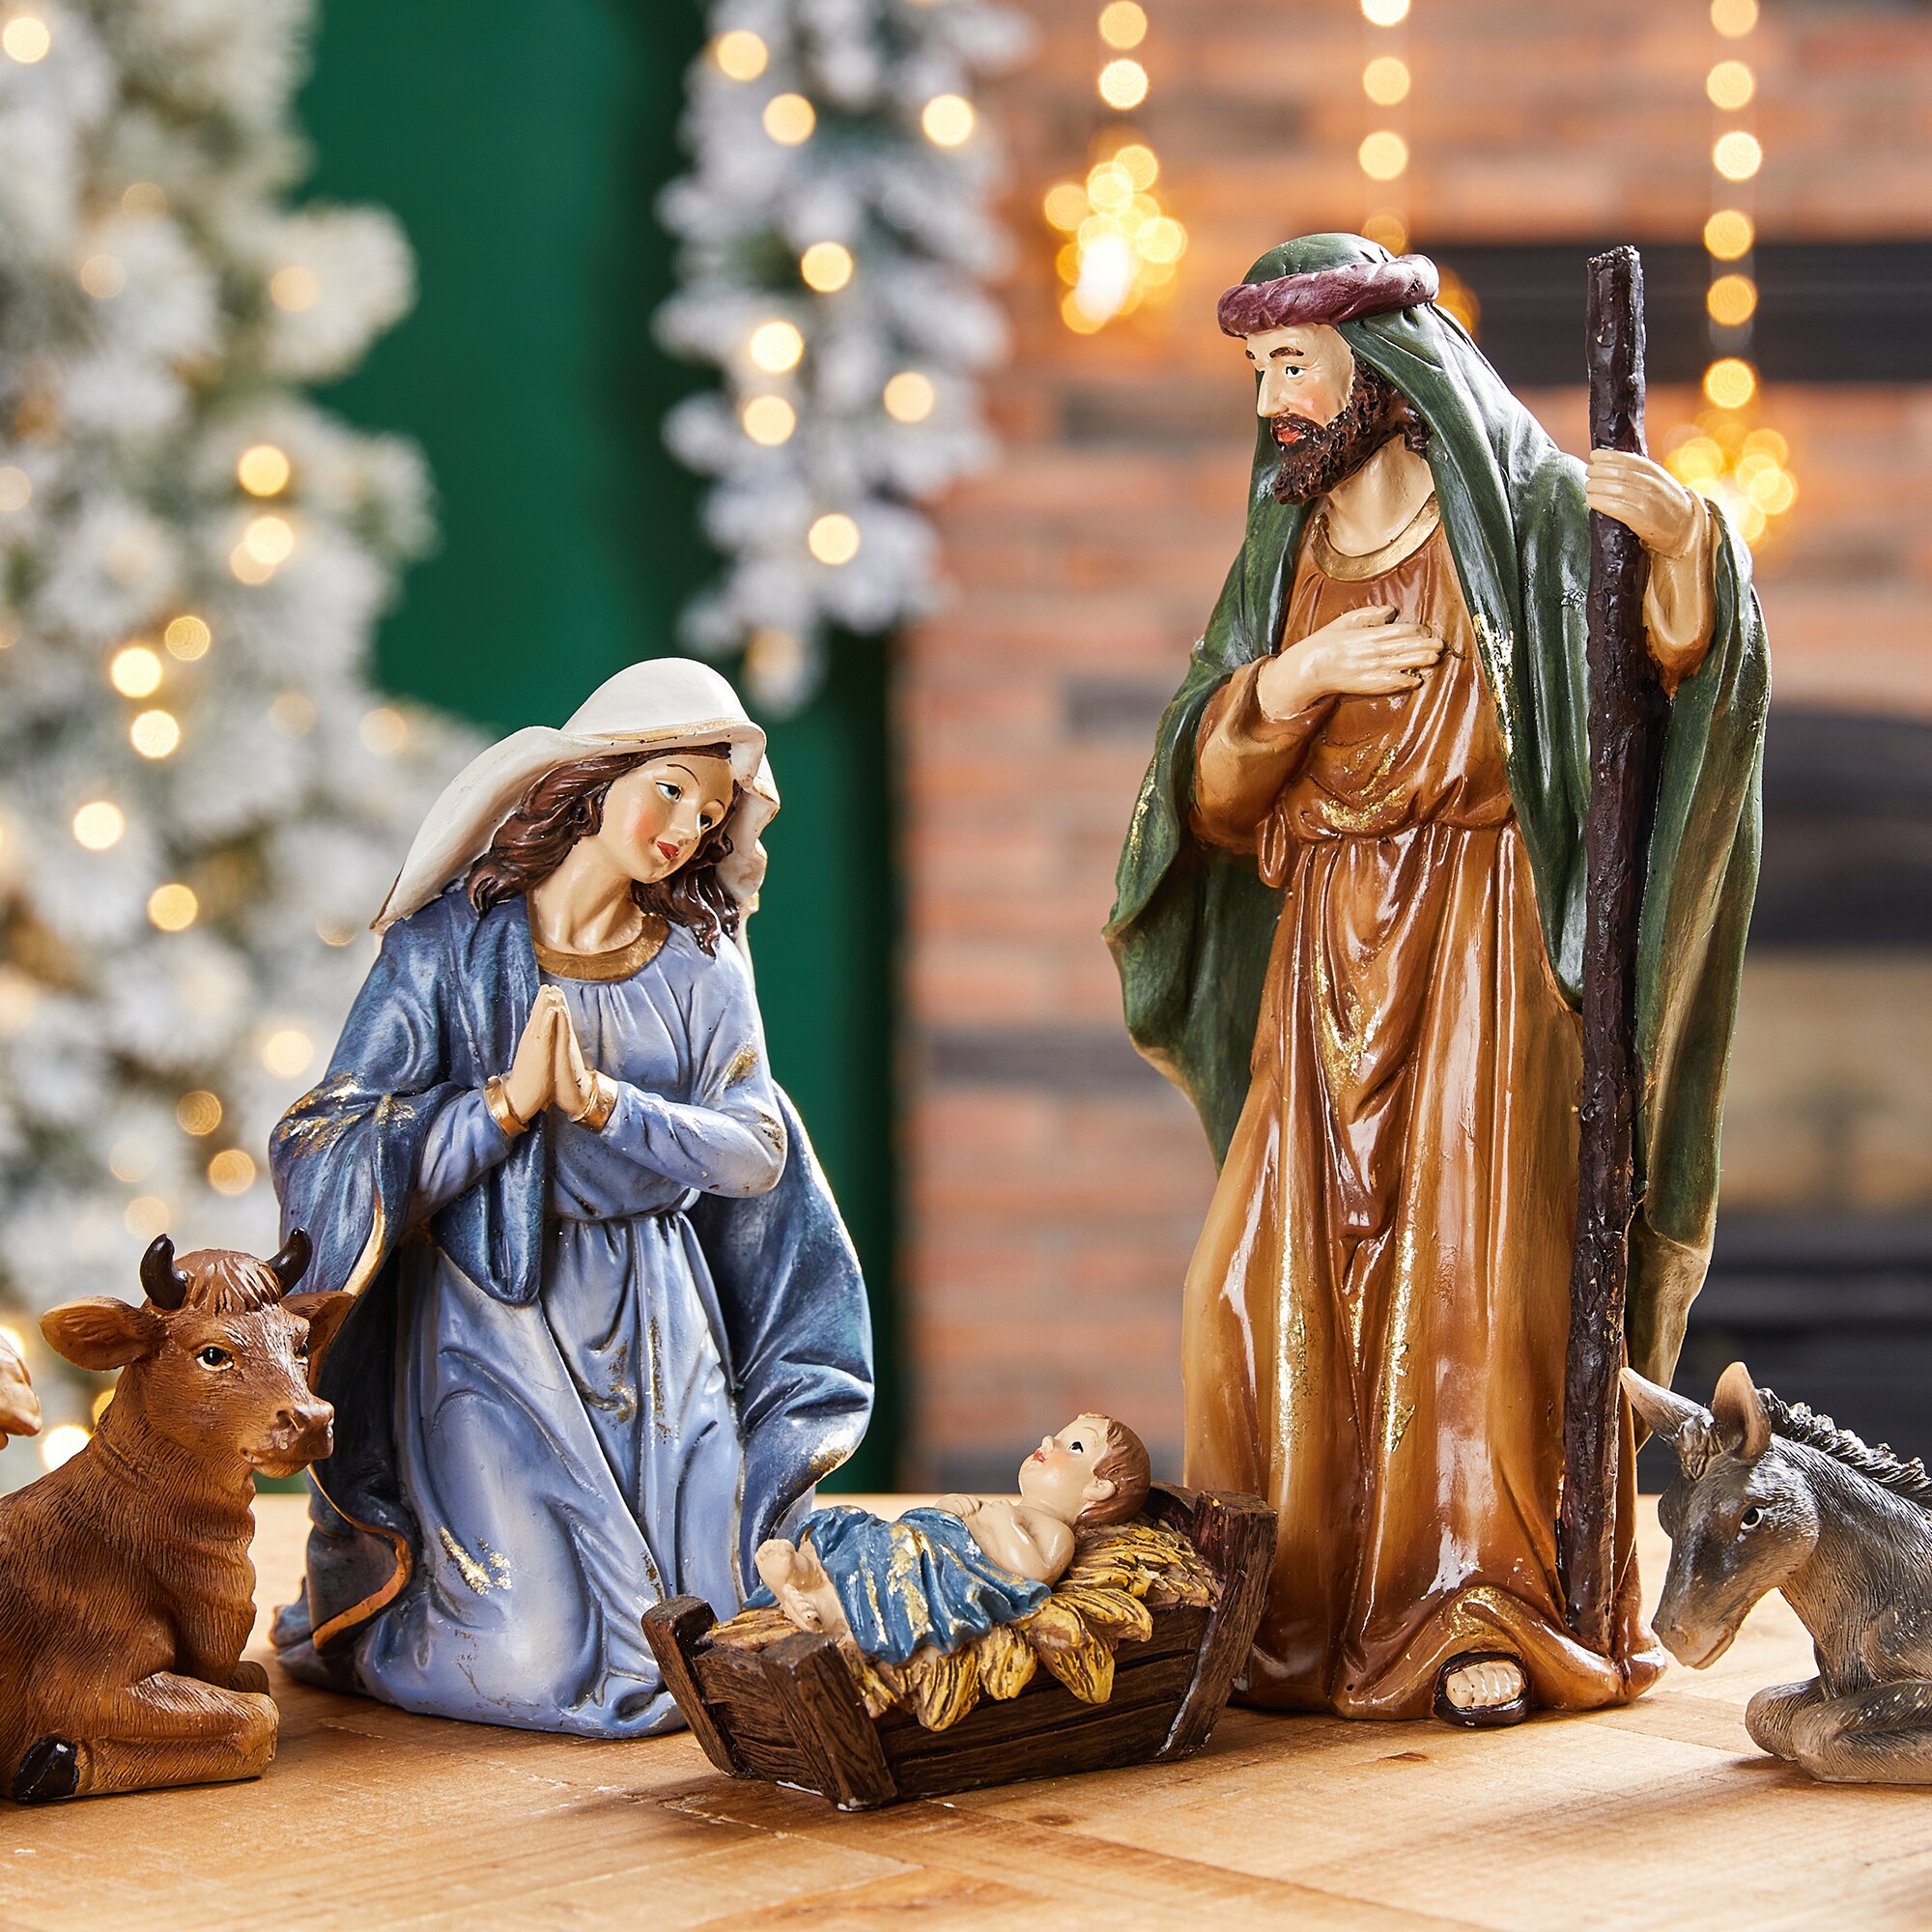 holiday decor Felt angel figurine part of nativity set Christmas tree topper 